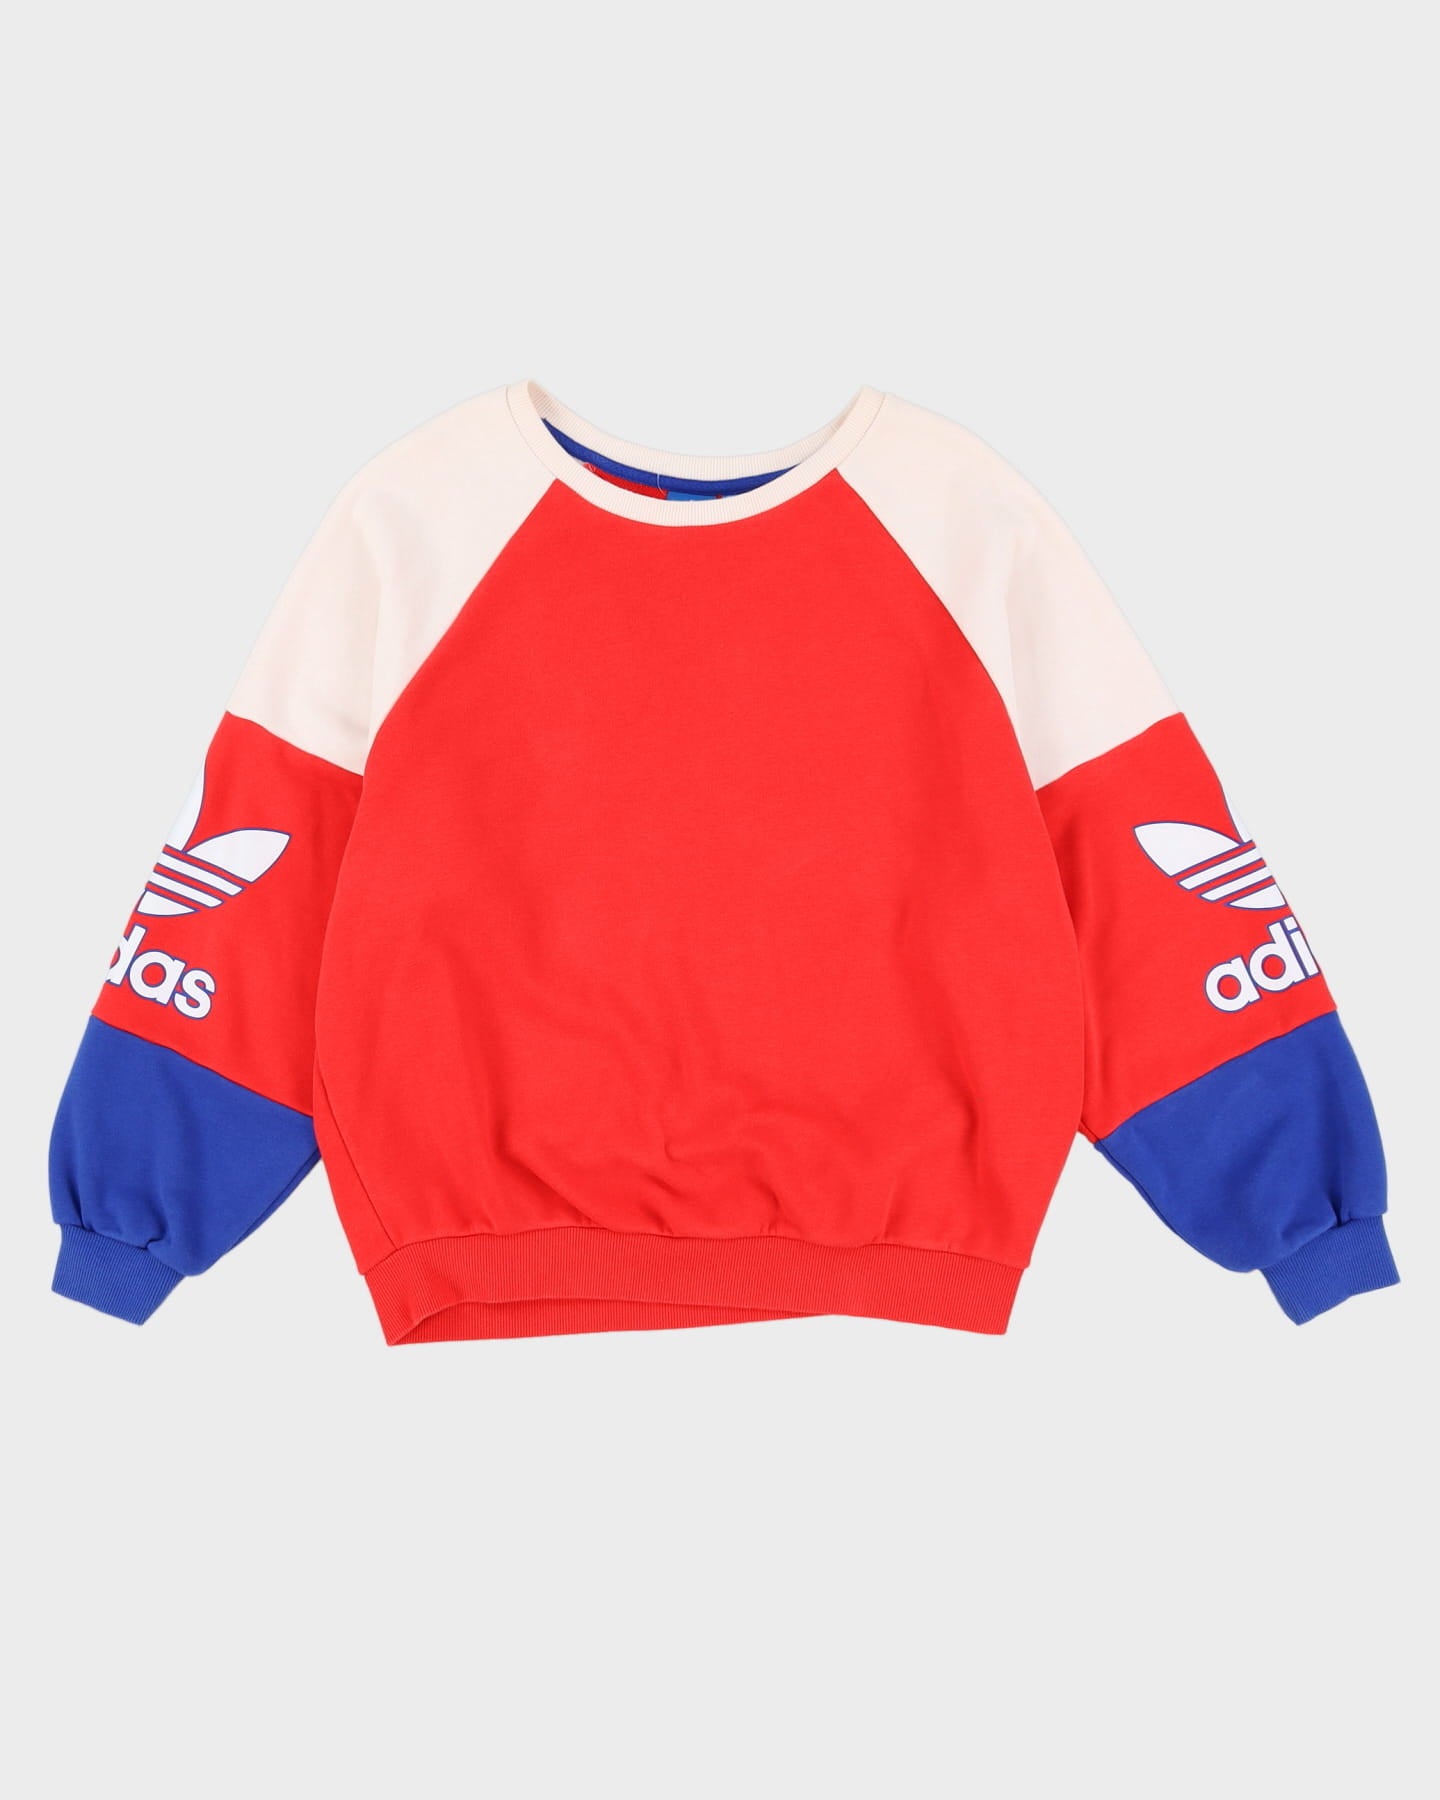 Adidas Red / White / Blue Colour Block Oversized Sweatshirt - S